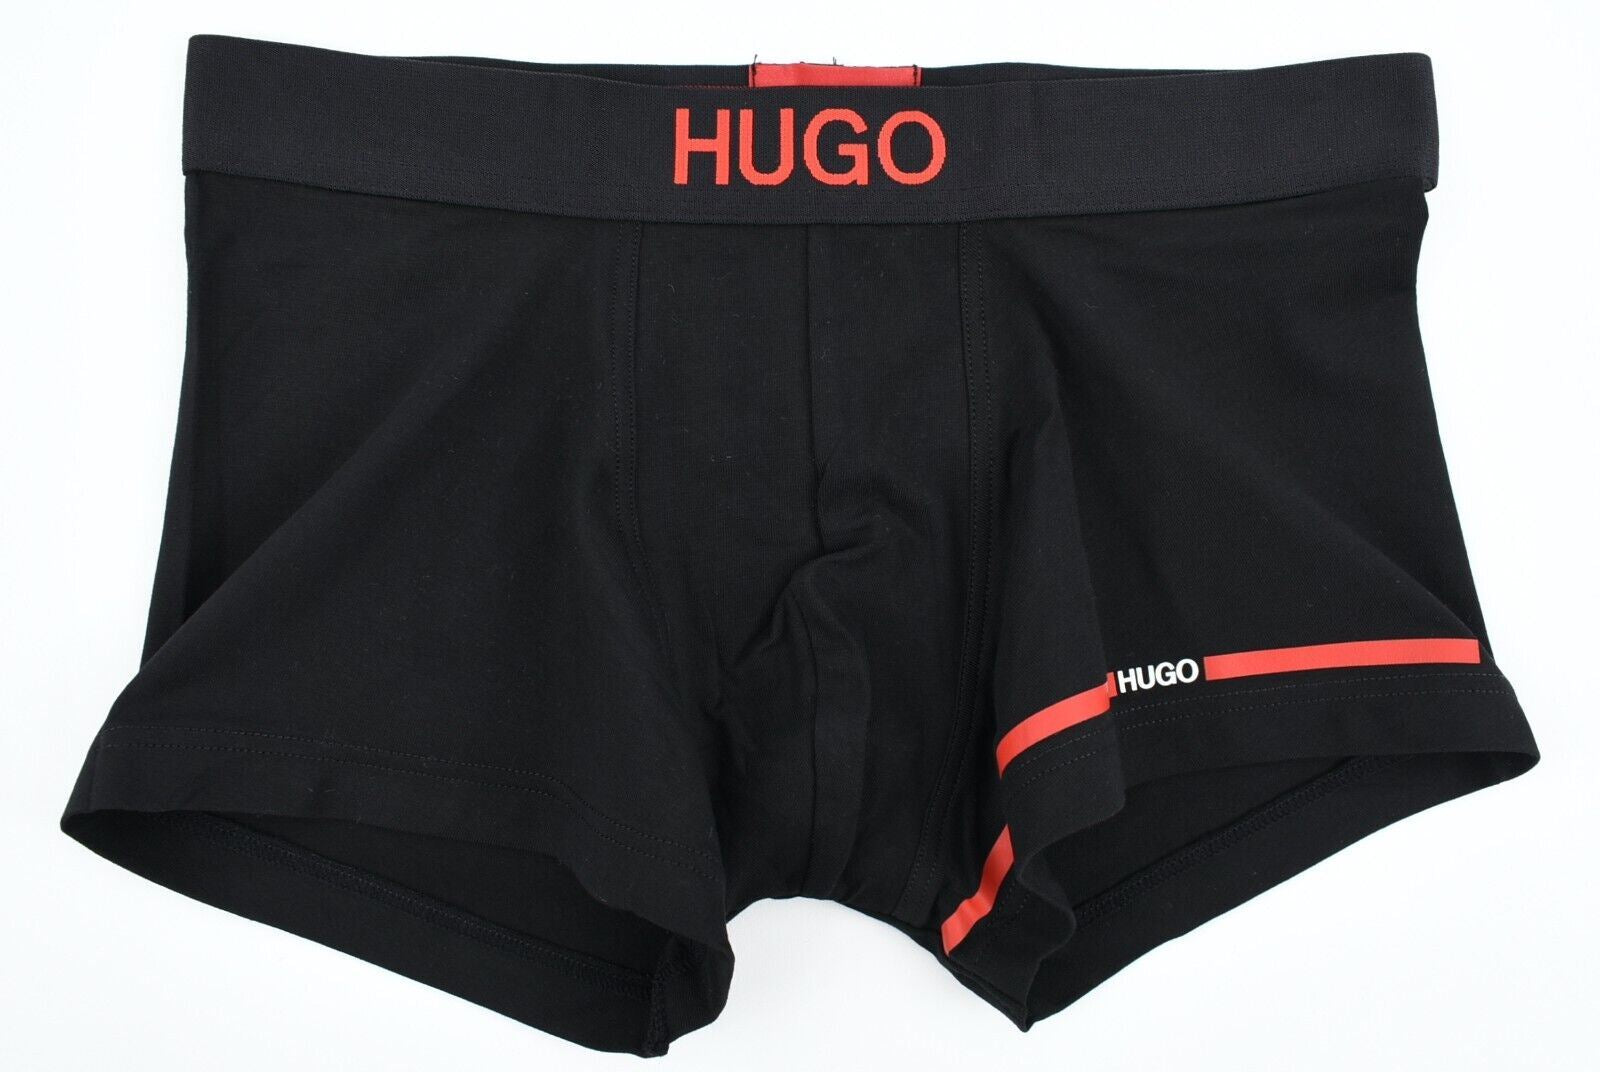 HUGO BOSS Underwear: Men's 2-Pack Low Rise Boxer Trunks, Black/Grey, size S